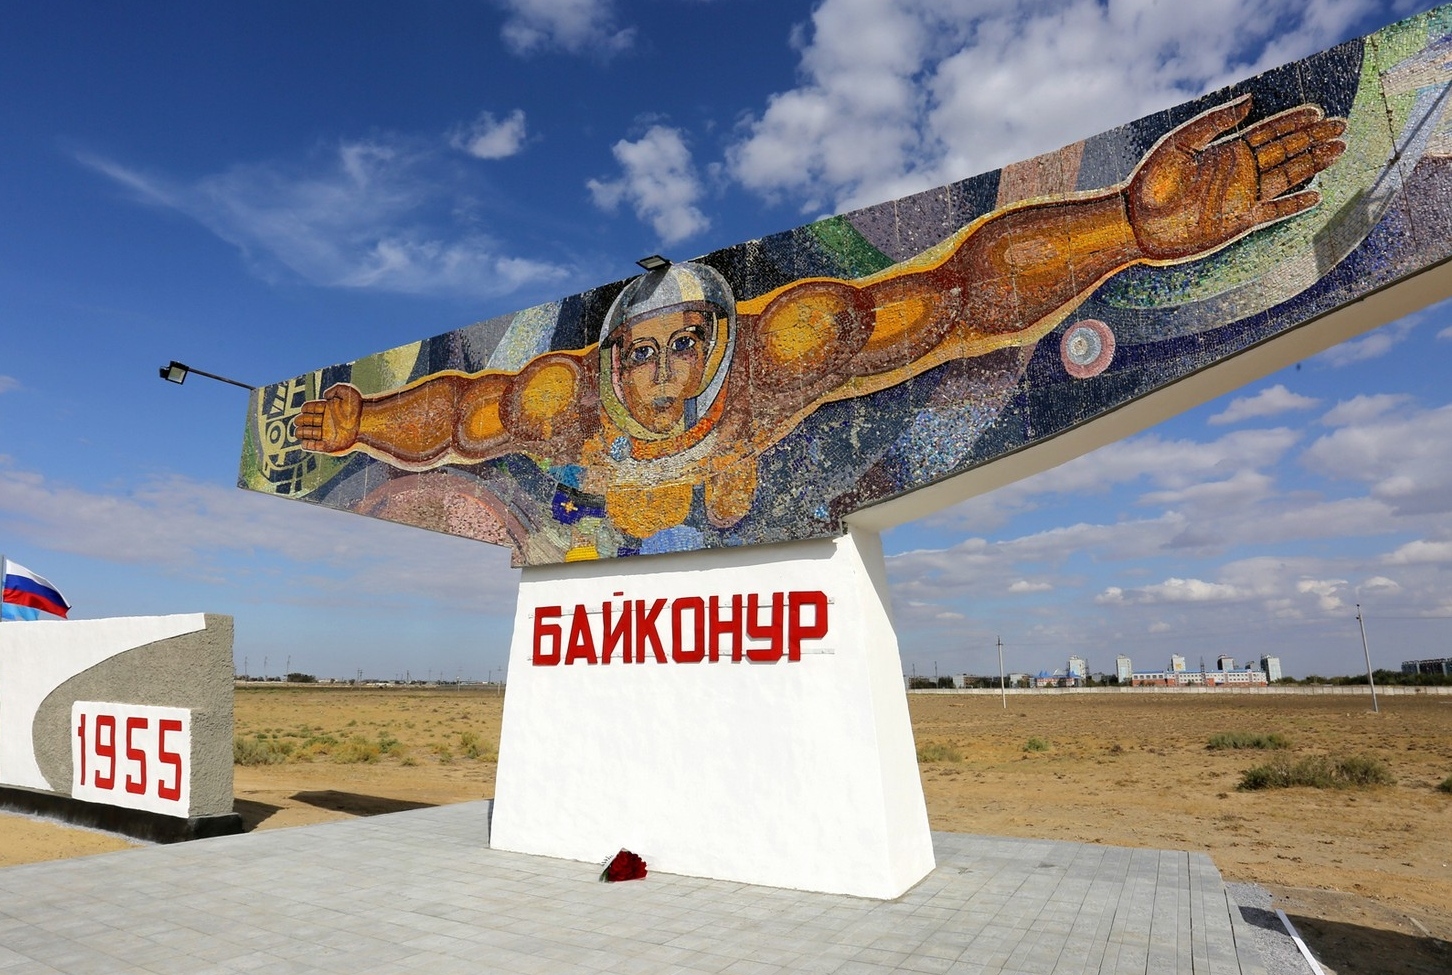 Байконур, космодром Байконур. Казахстан